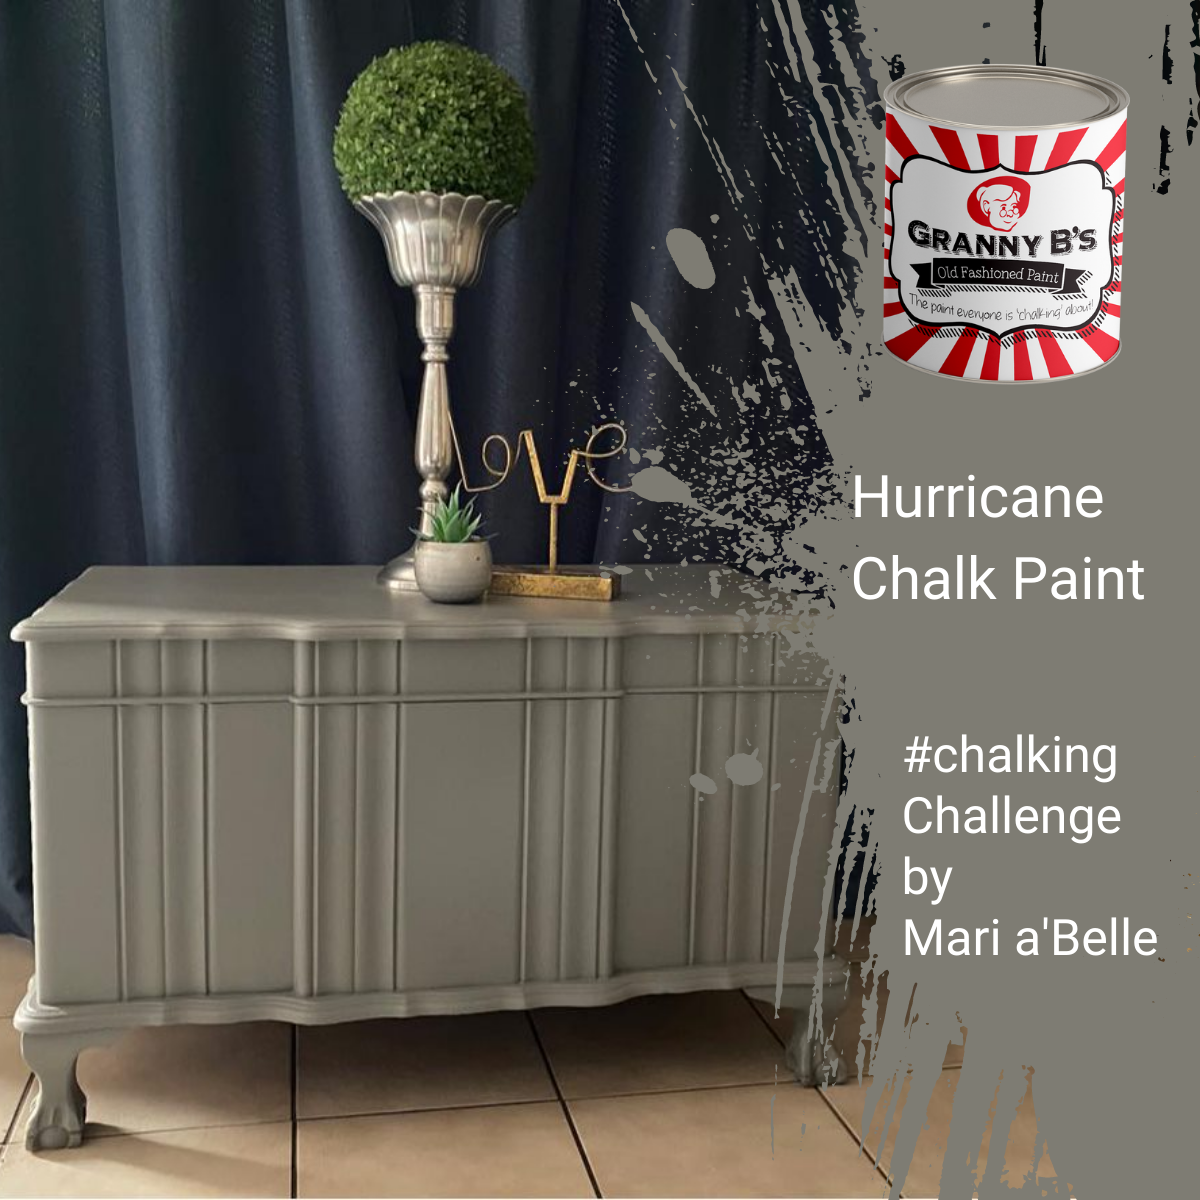 Chalkpaint - Hurricane Grey (Dark Grey) - Granny B's Old Fashioned Paint